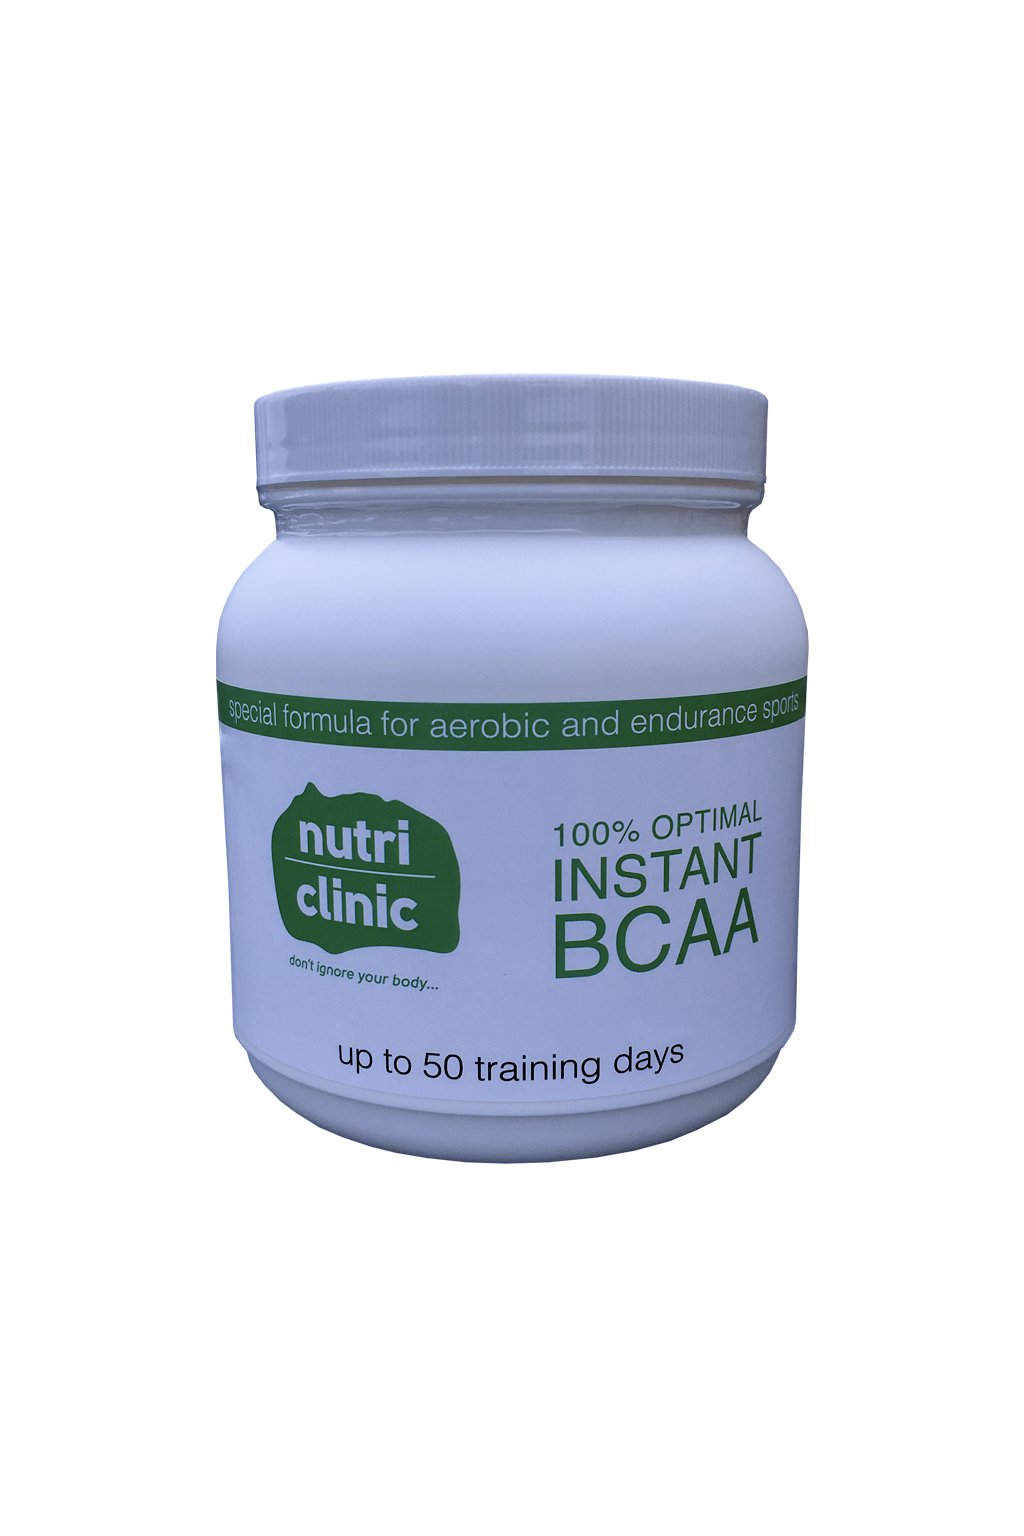 Nutri clinic Instant BCAA